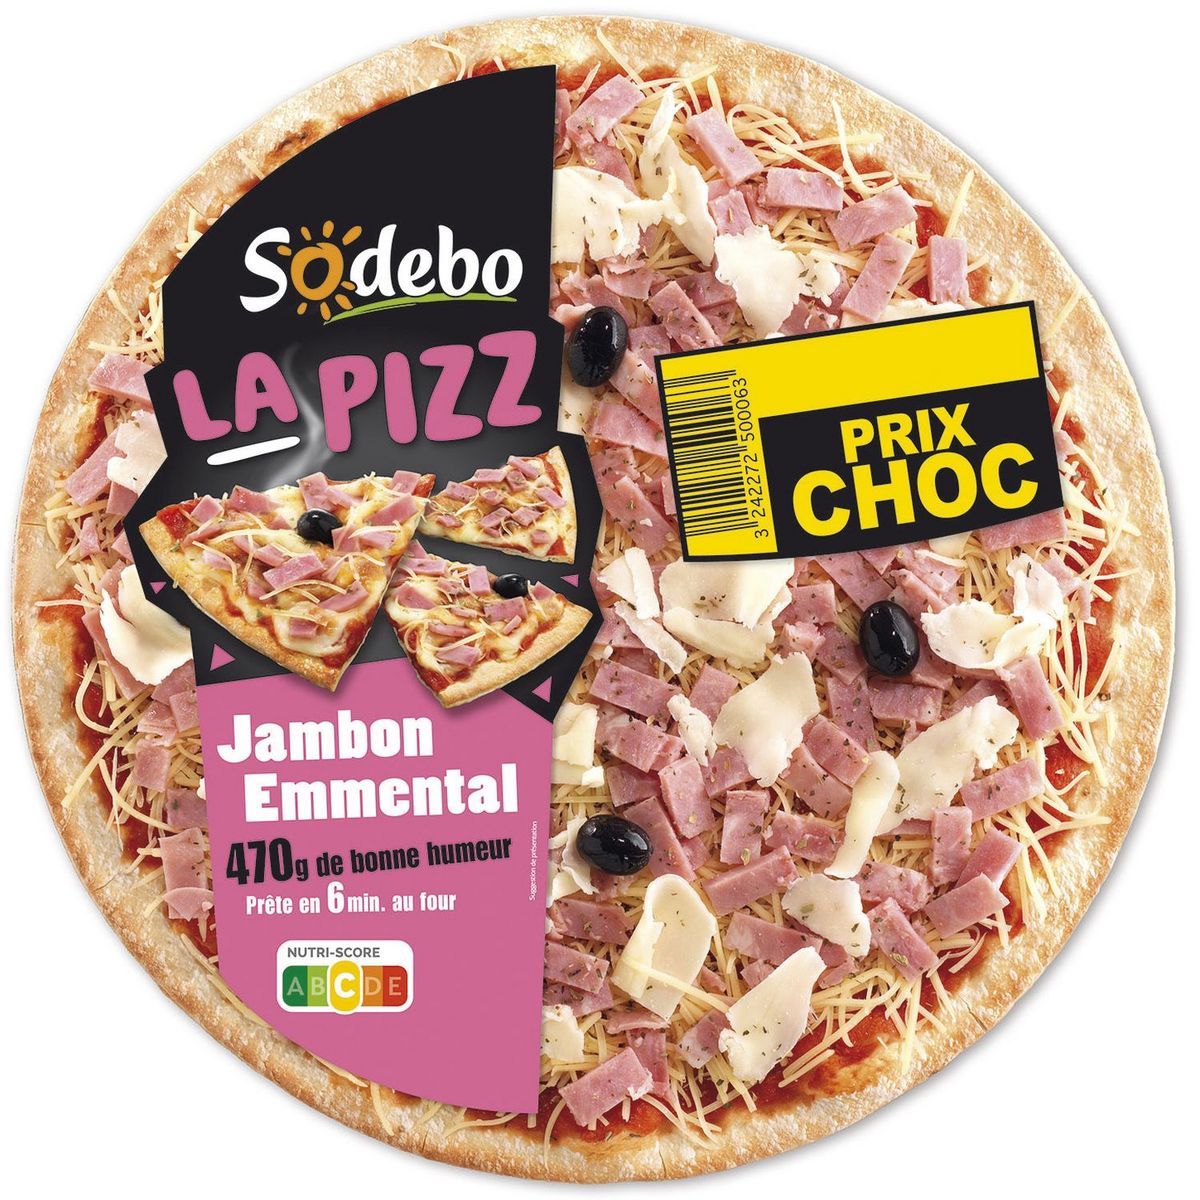 SODEBO La Pizz' Pizza jambon emmental 470g